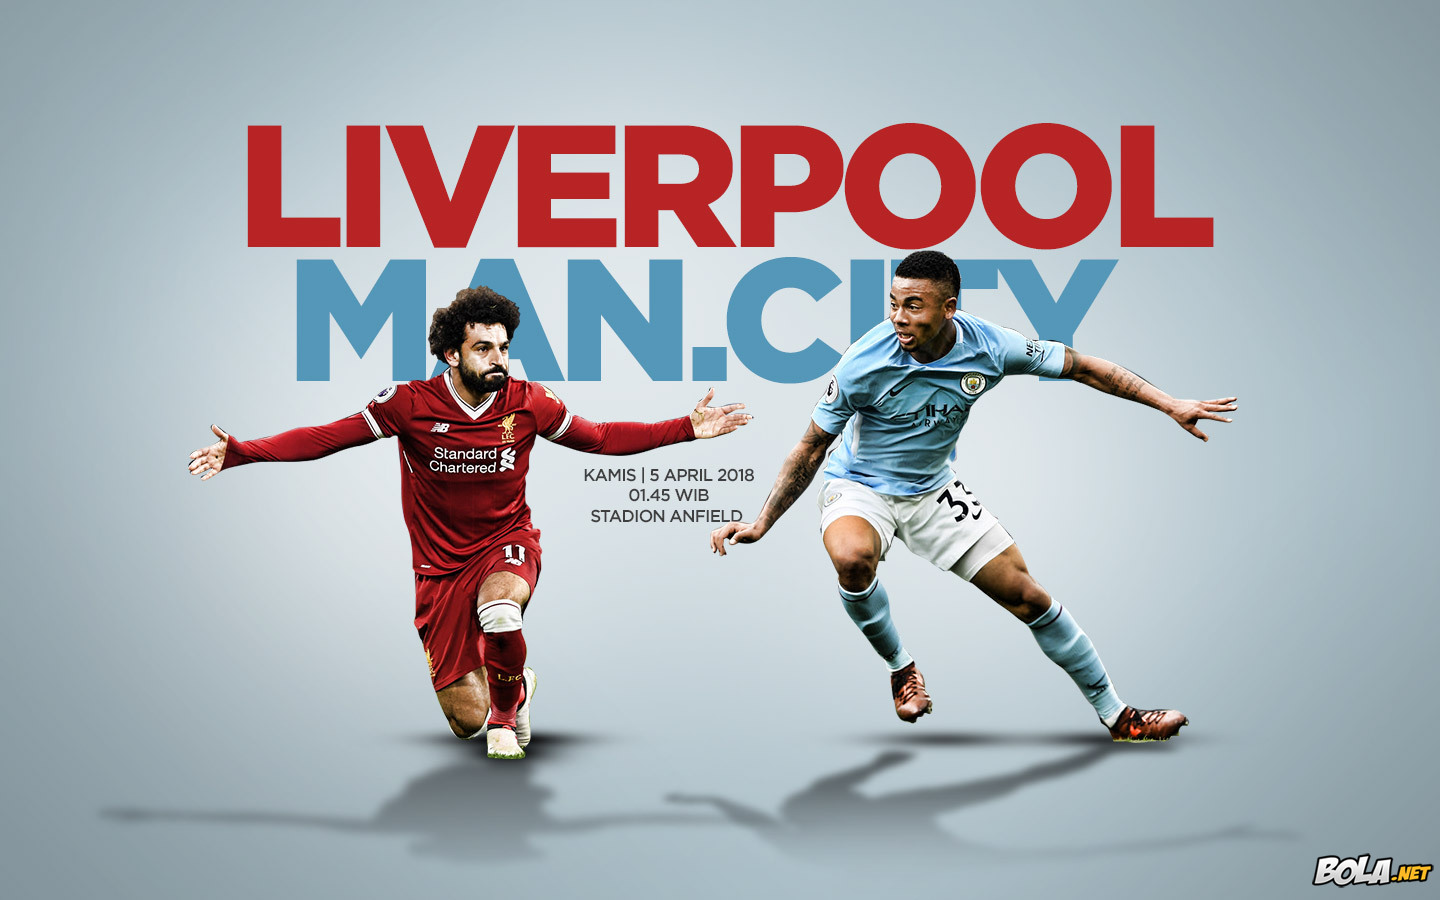 Deskripsi : Wallpaper Liverpool Vs Manchester City, size: 1440x900